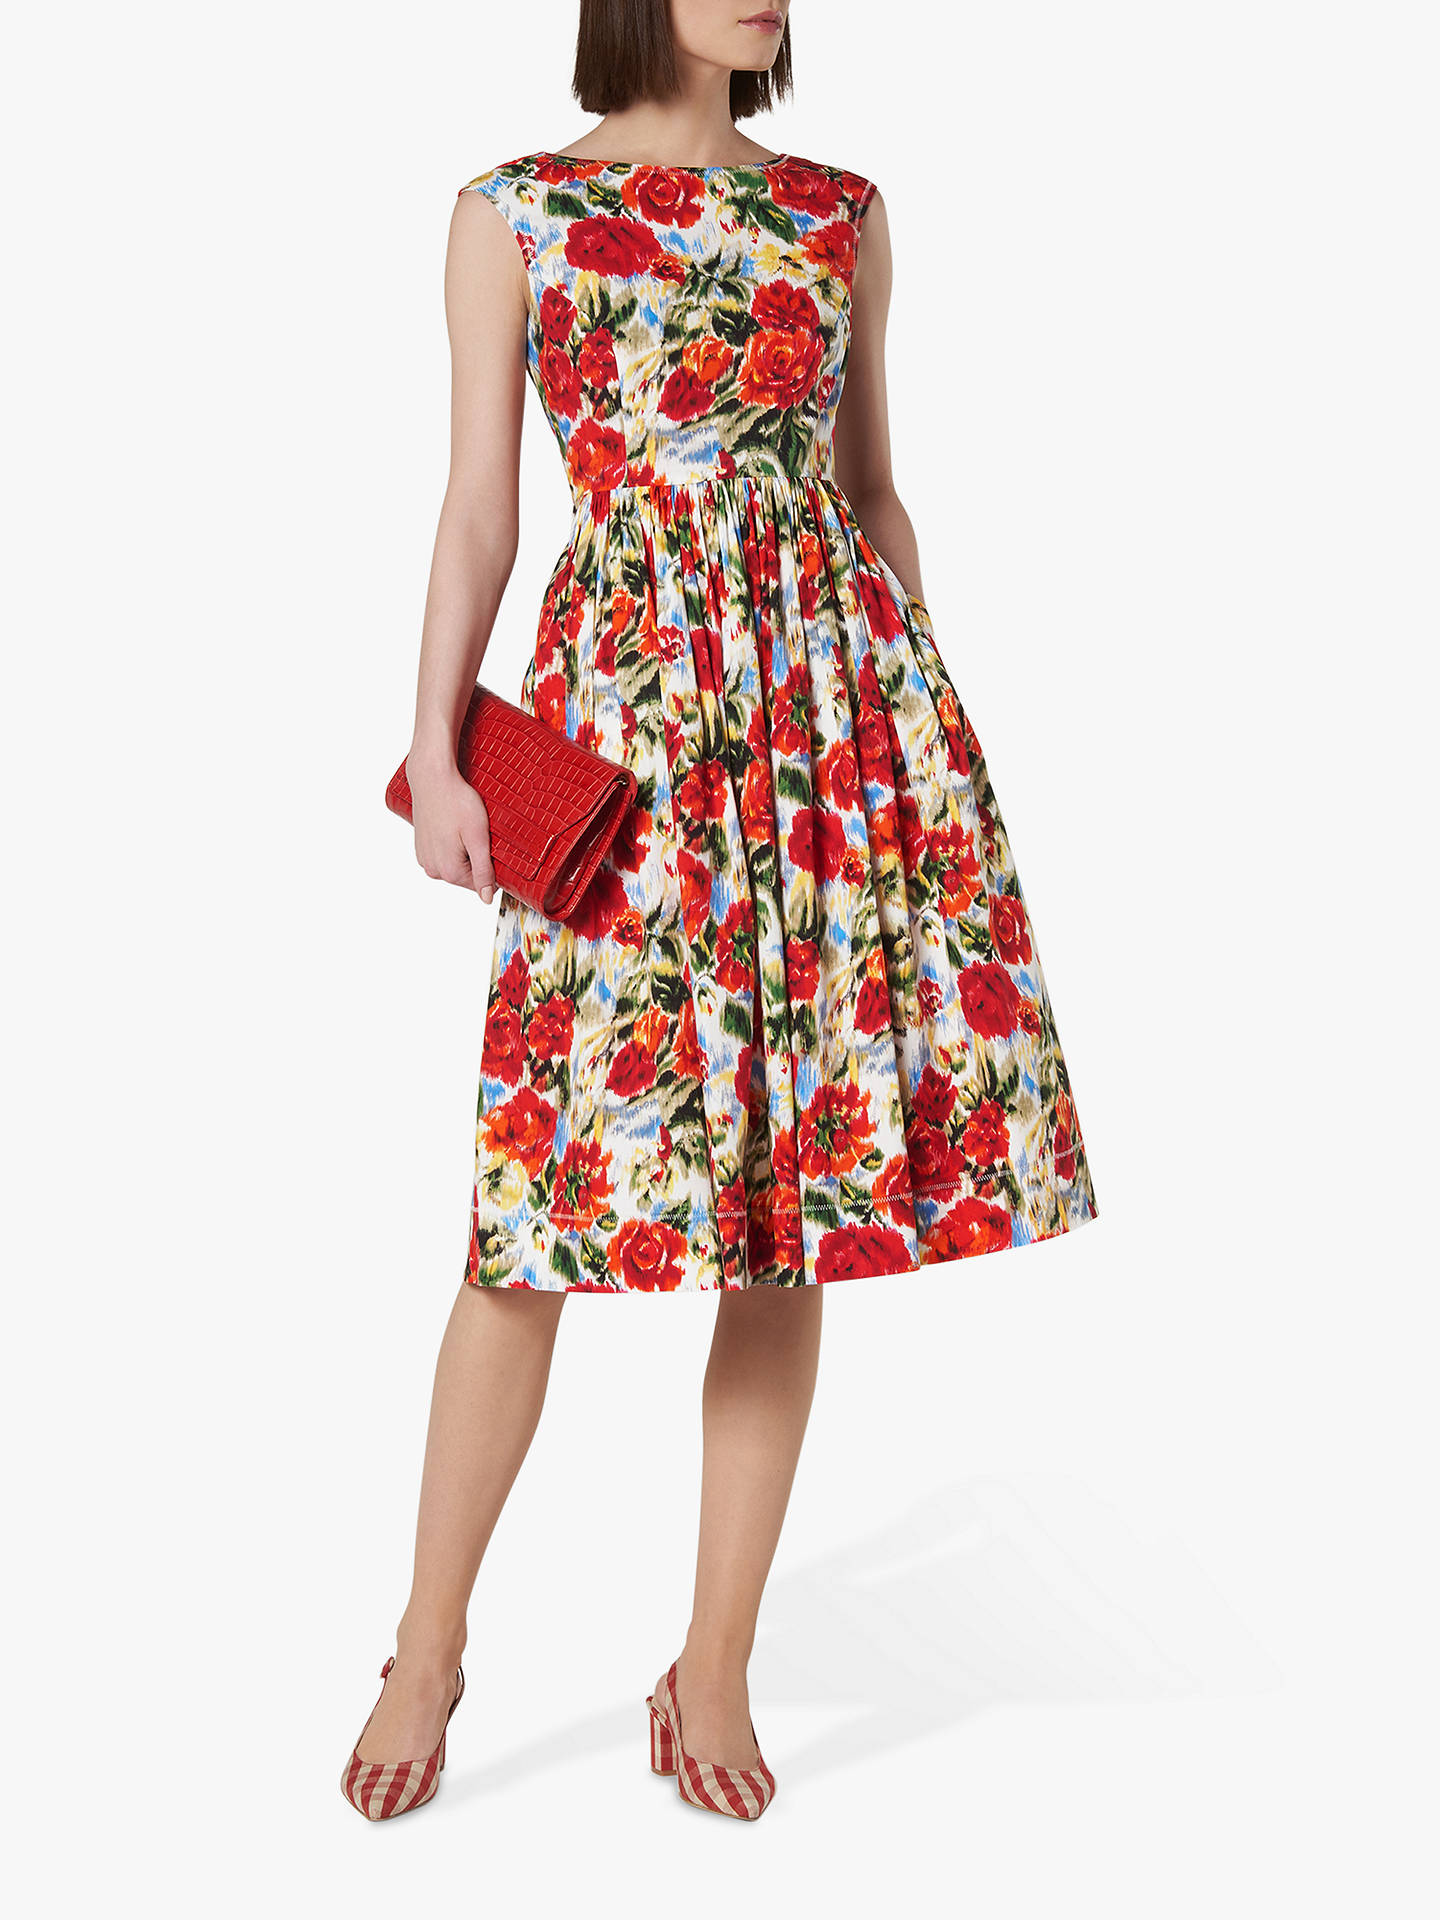 L.K.Bennett Issie Floral Dress at John Lewis & Partners